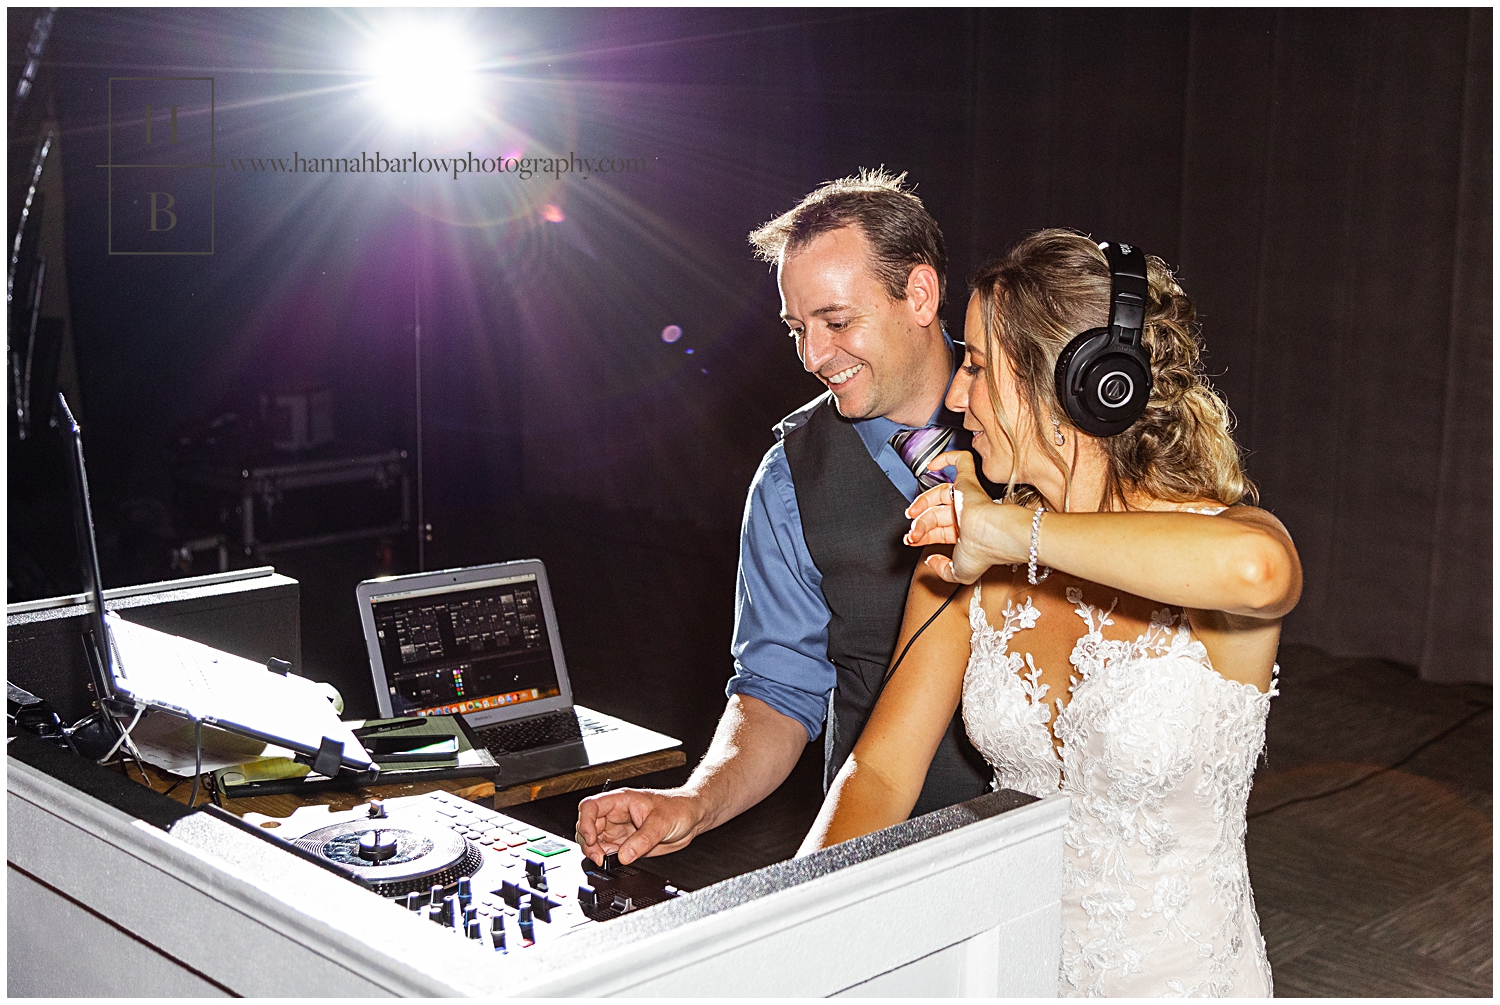 Wedding DJ has bride act as DJ wearing headphones and scratching